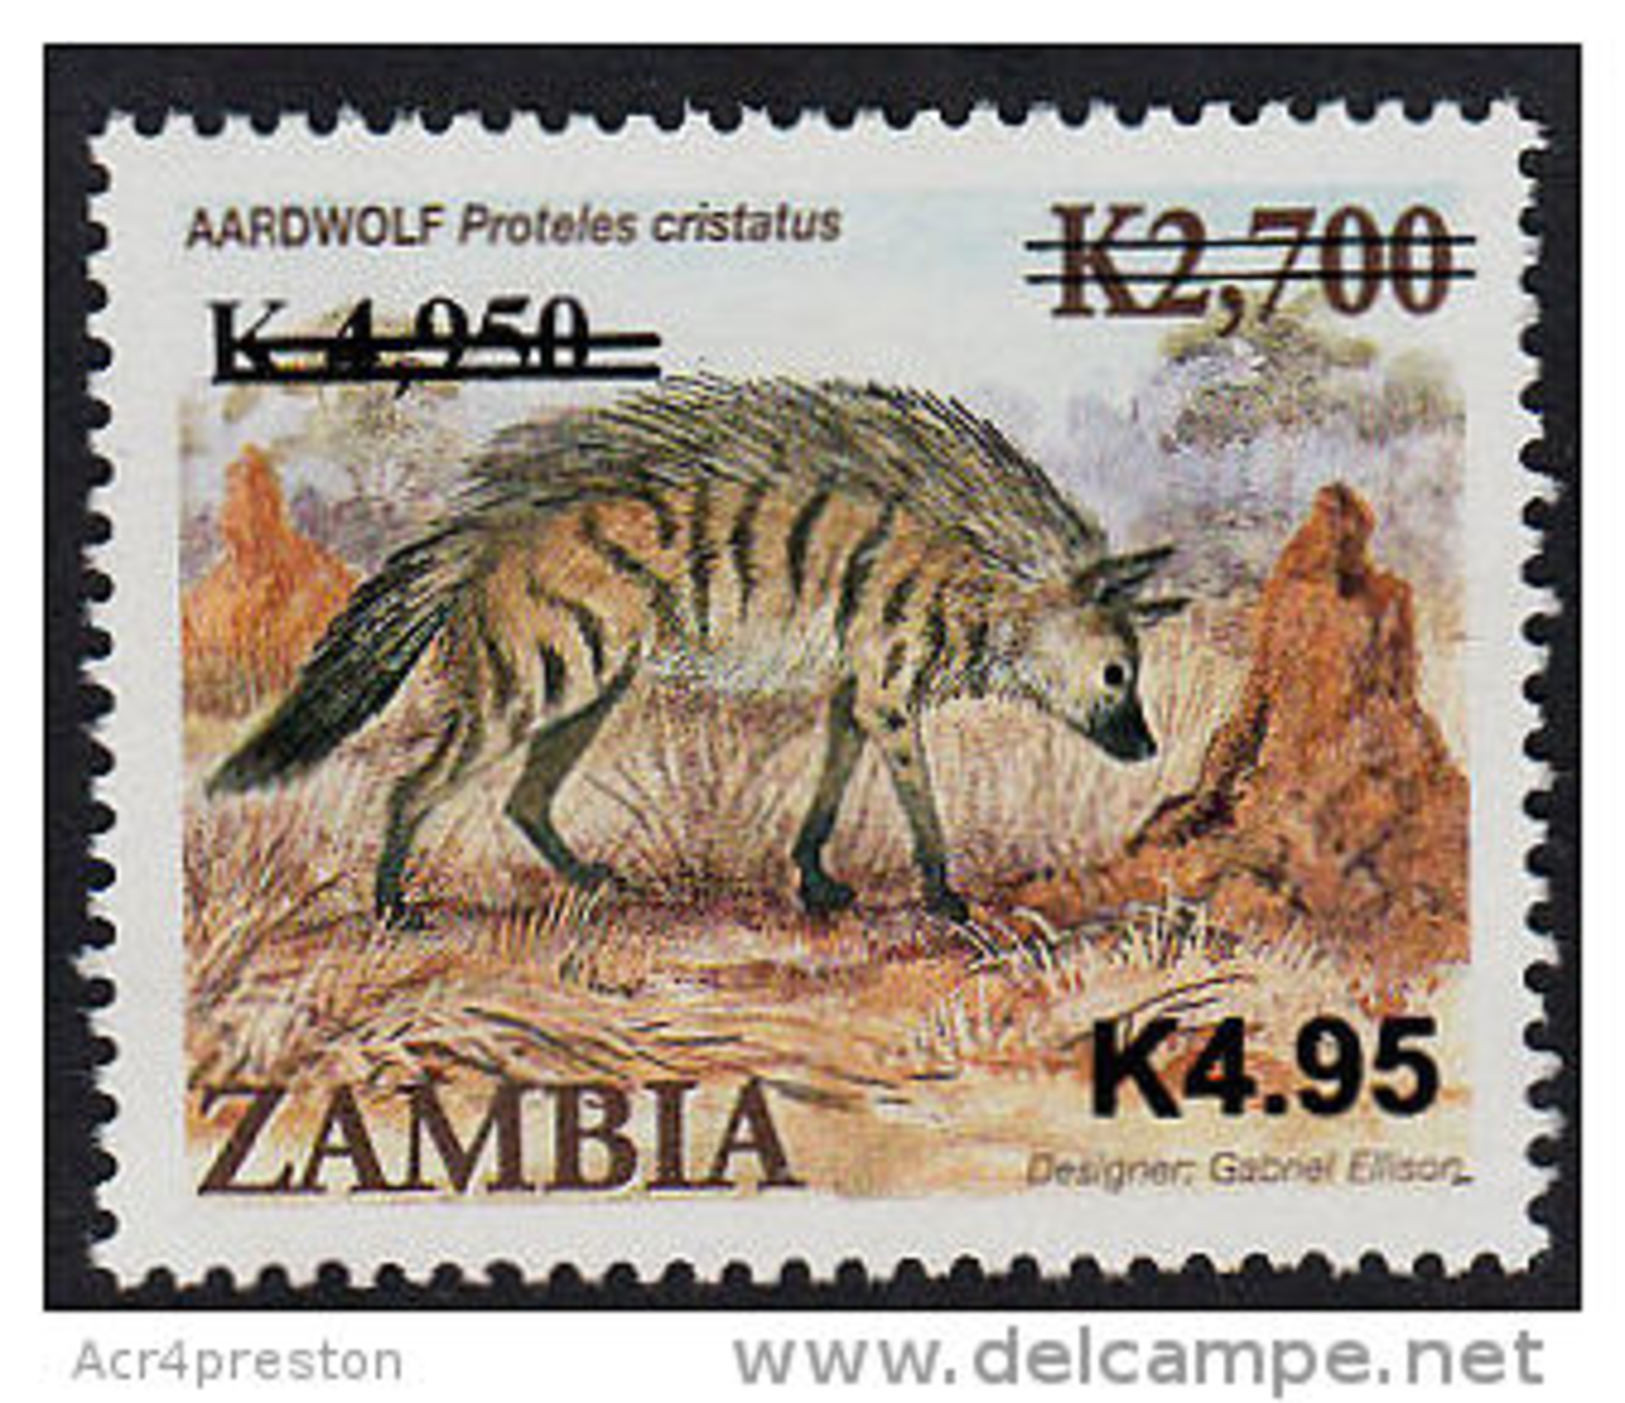 Zm1101 ZAMBIA 2013, New Currency K4.95 Surcharge On K4,900 On K2,700 Animals  MNH - Zambie (1965-...)